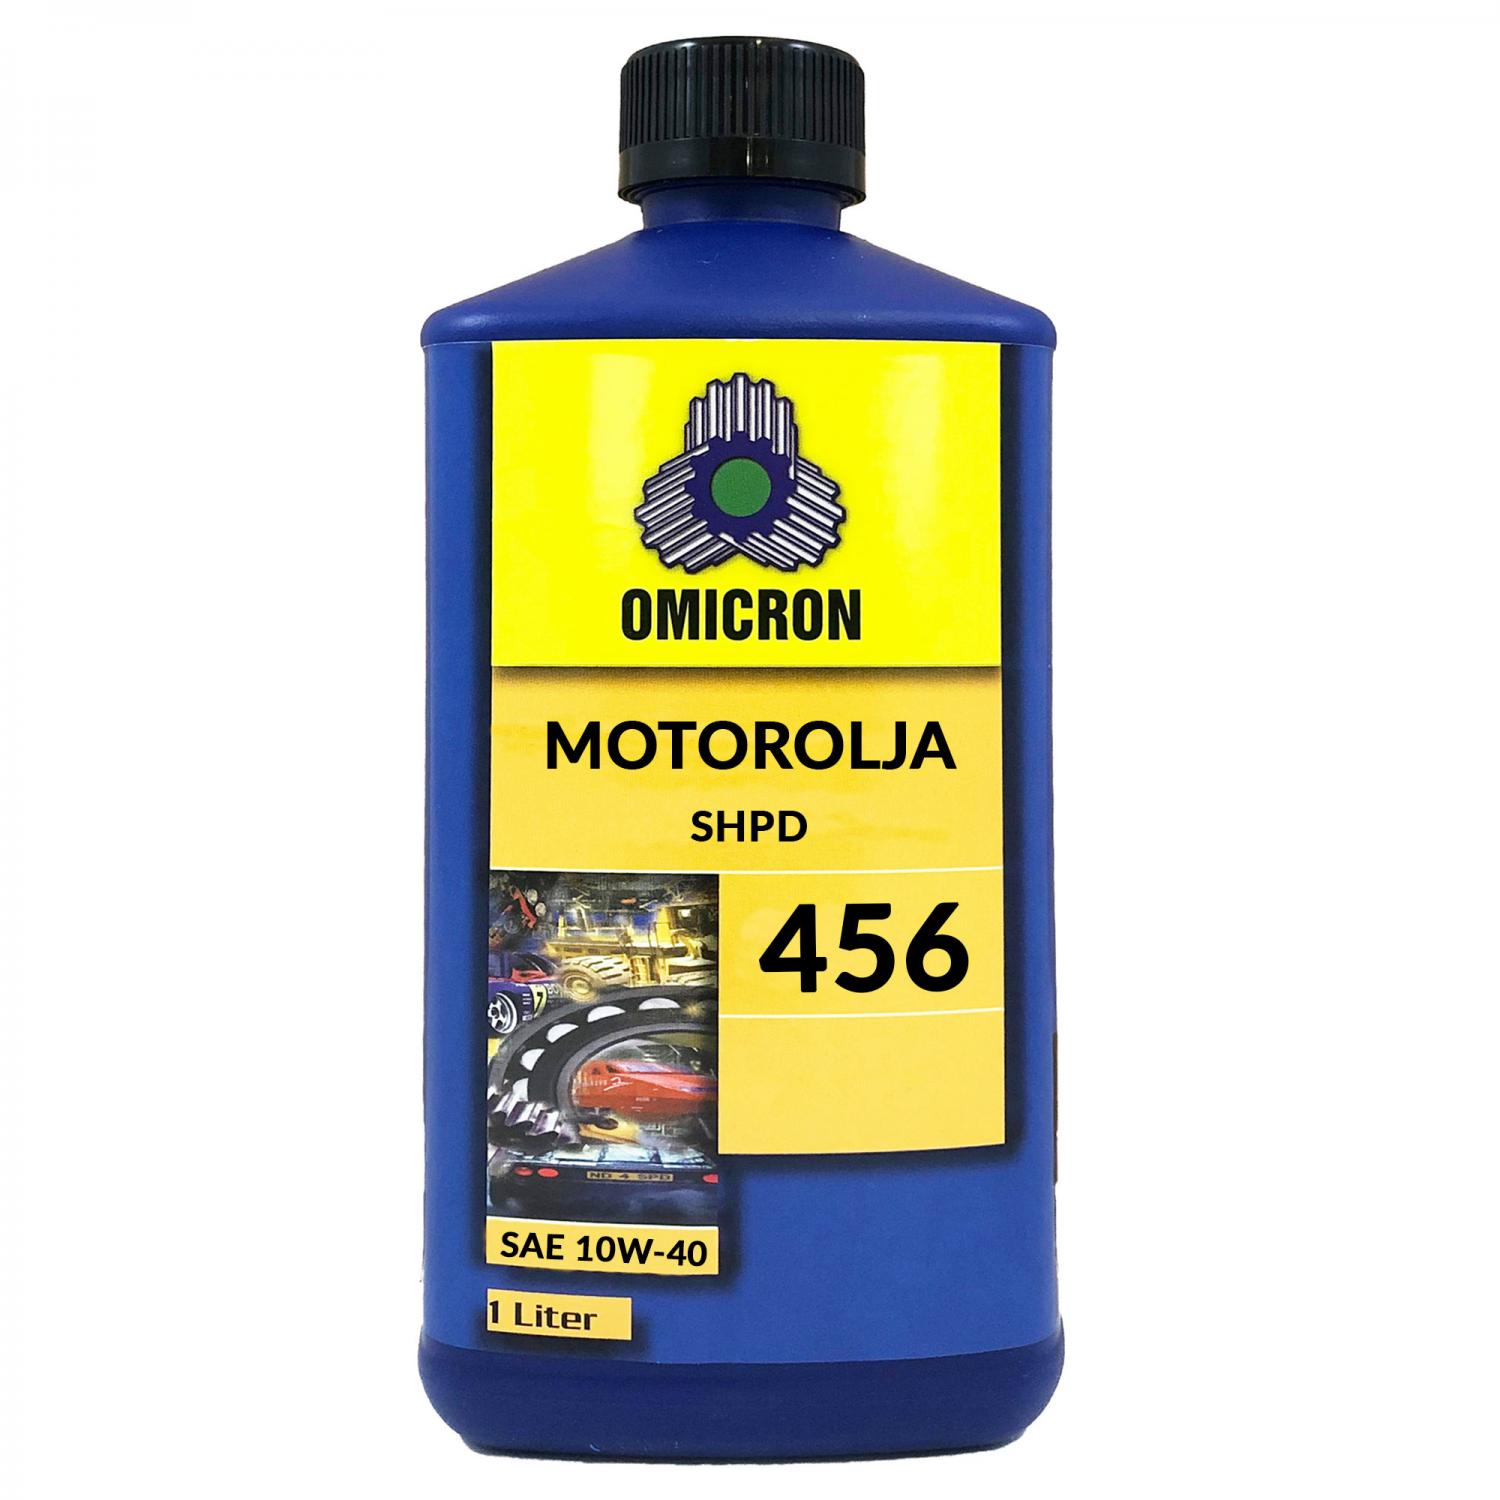 Omicron 456 10W-40 Motorolja SHPD